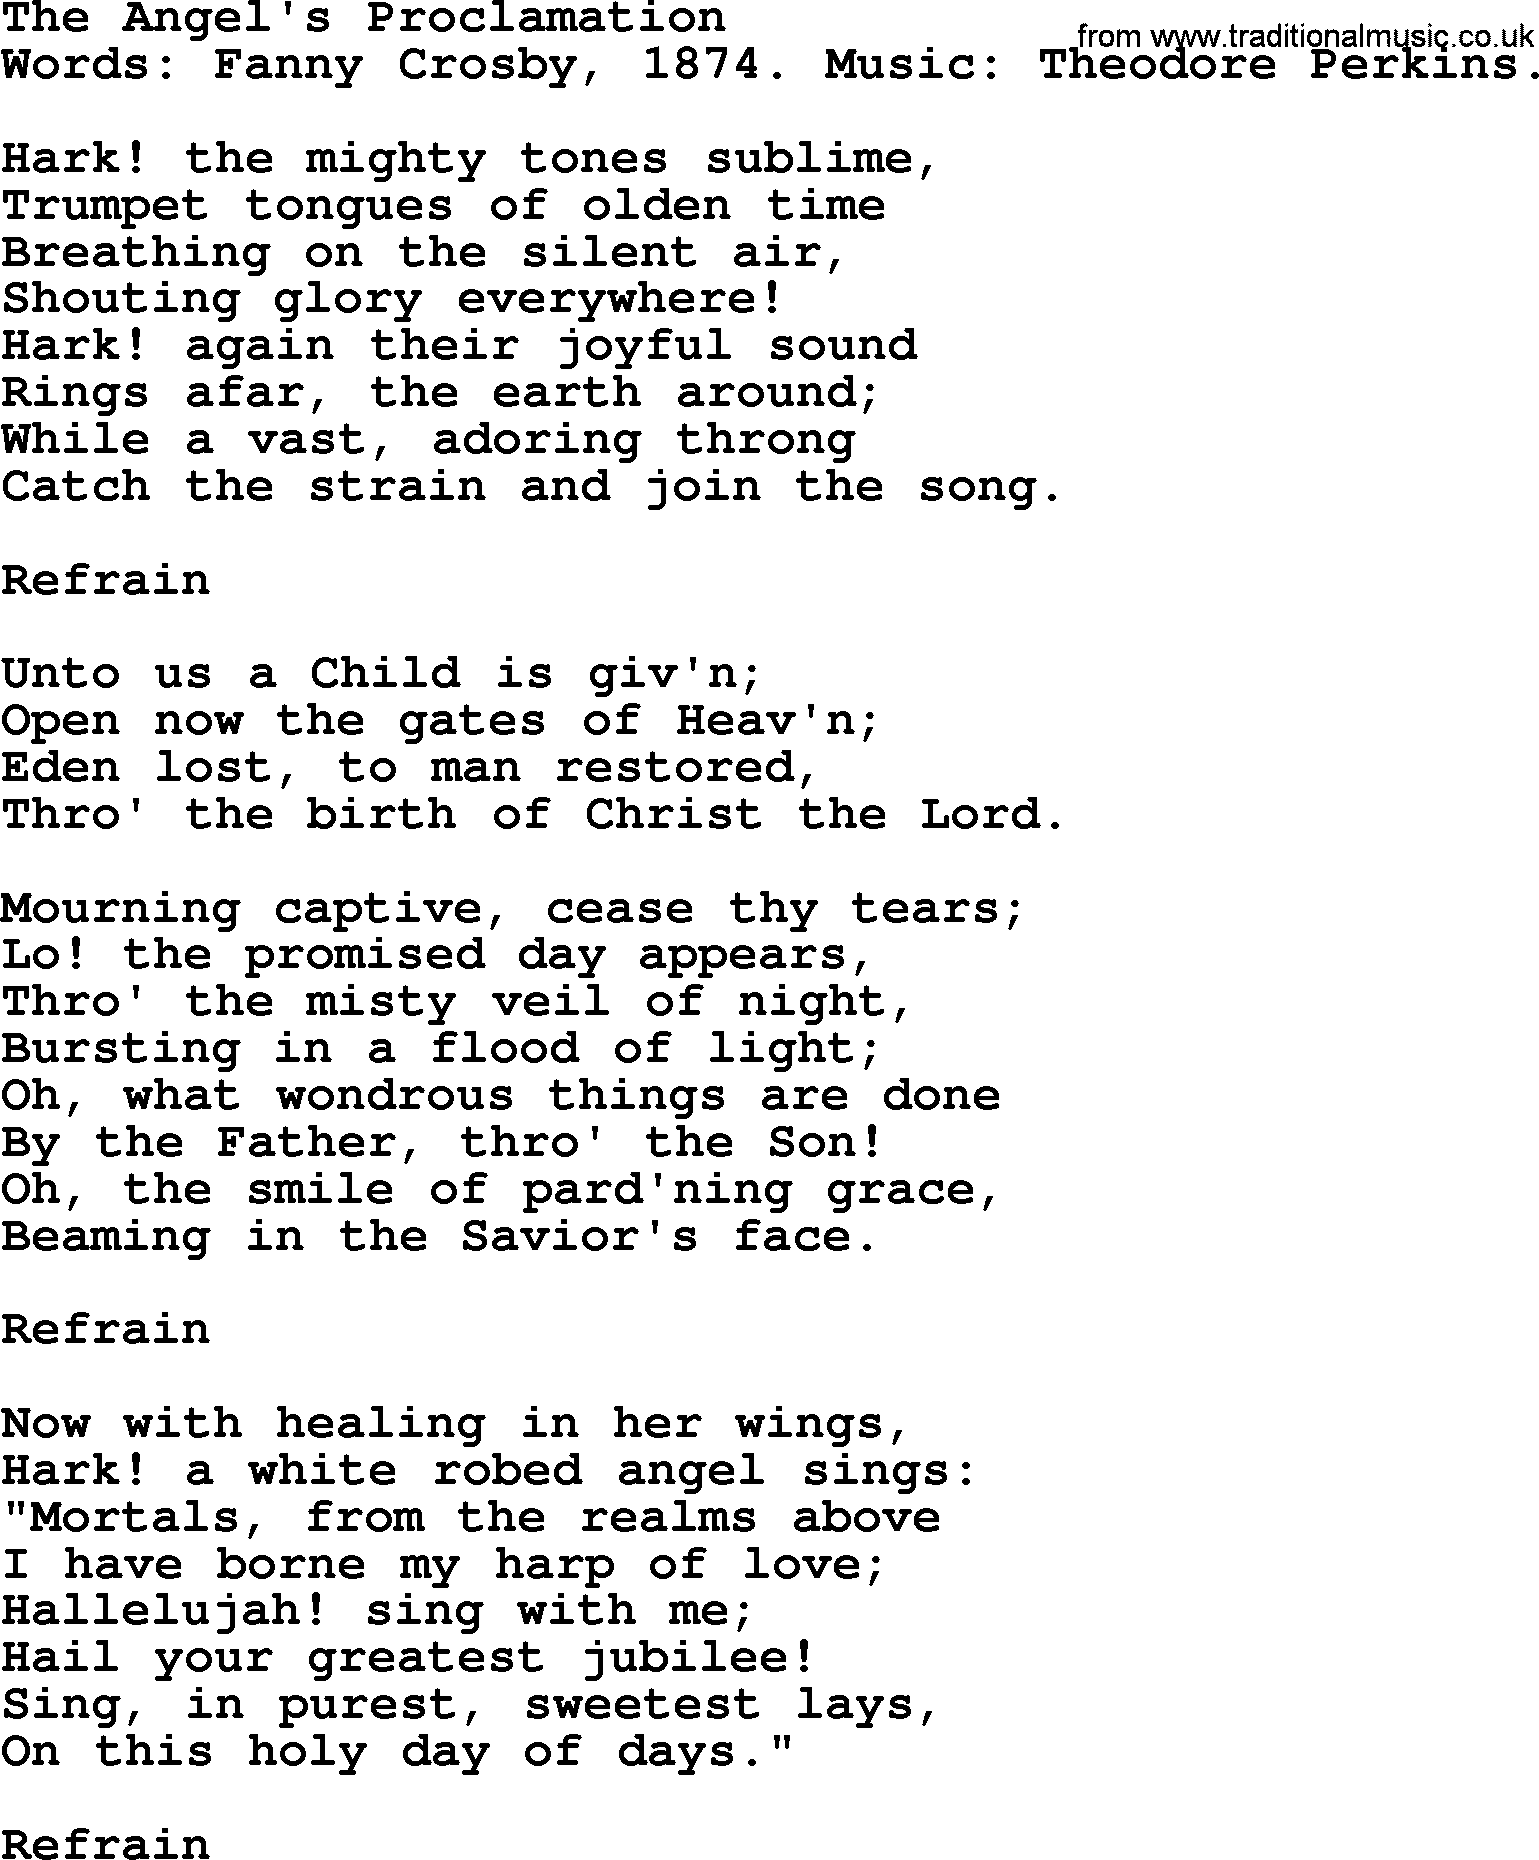 Fanny Crosby song: The Angel's Proclamation, lyrics